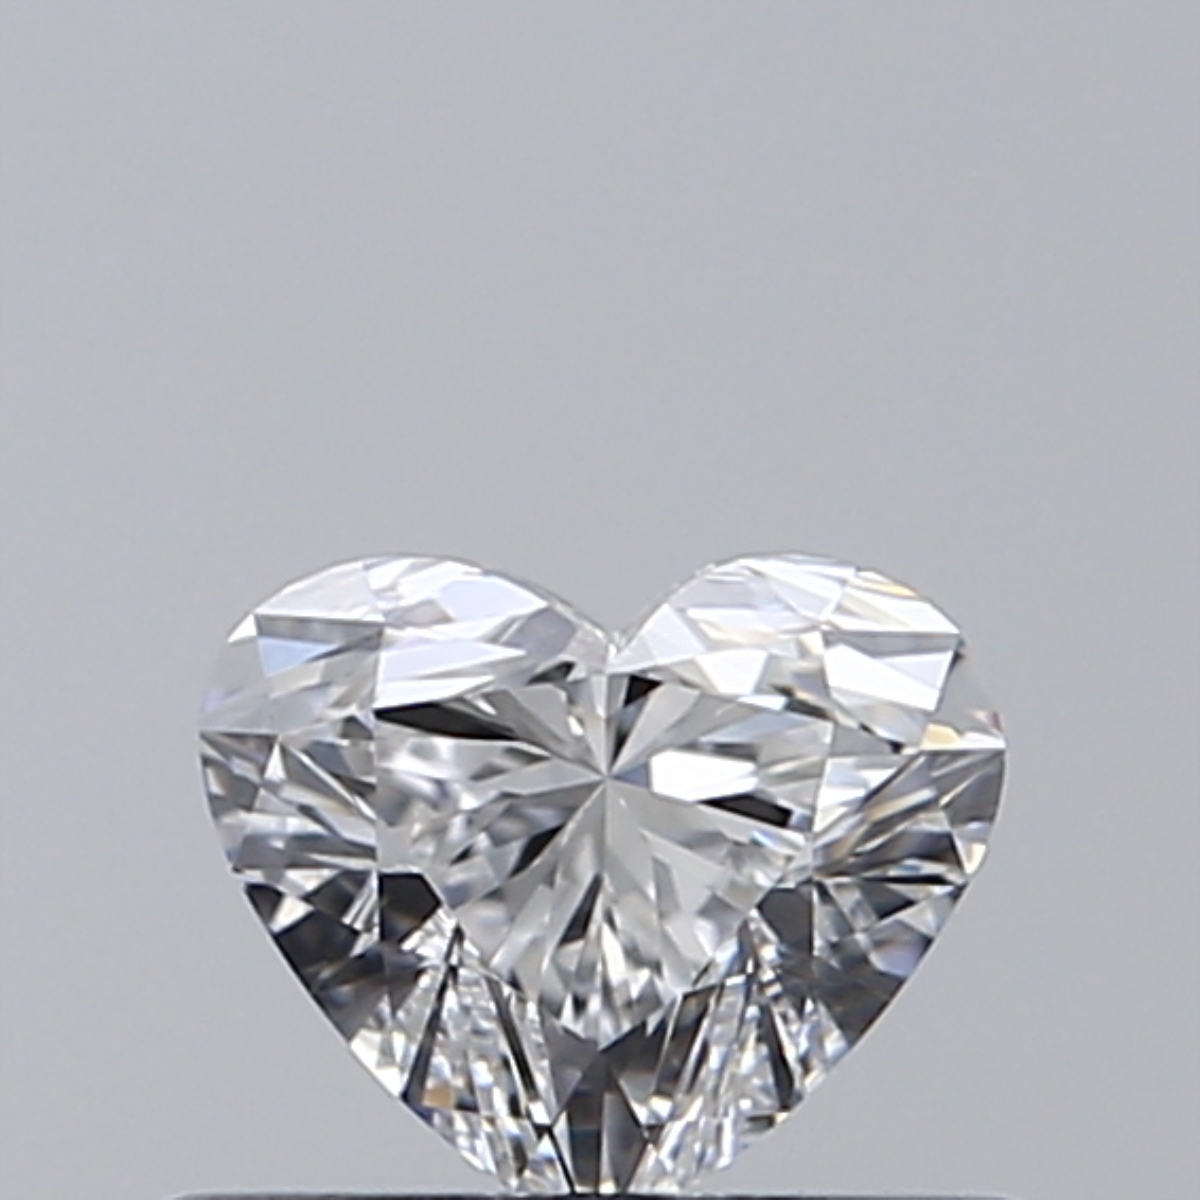 0.37 Carat Heart Loose Diamond, D, IF, Super Ideal, GIA Certified